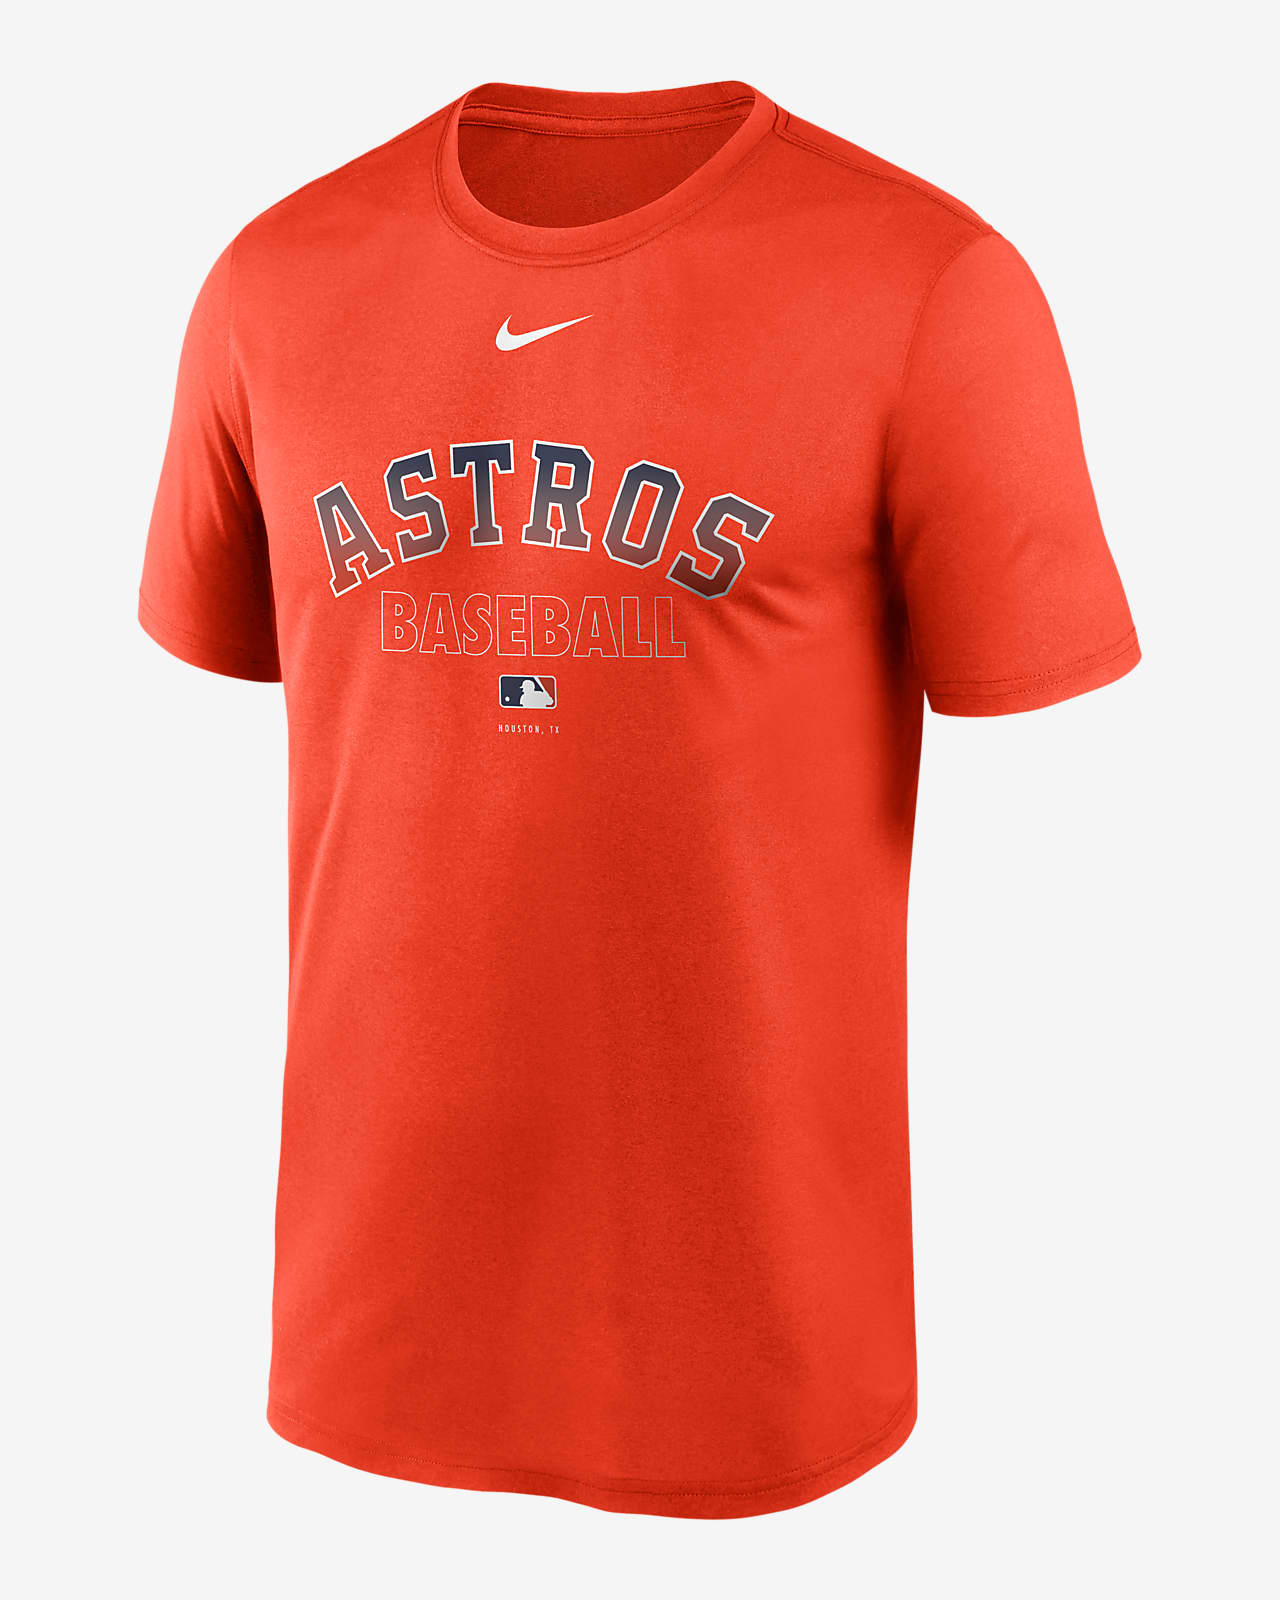 MLB Astros) Big Kids' (Boys') T-Shirt 